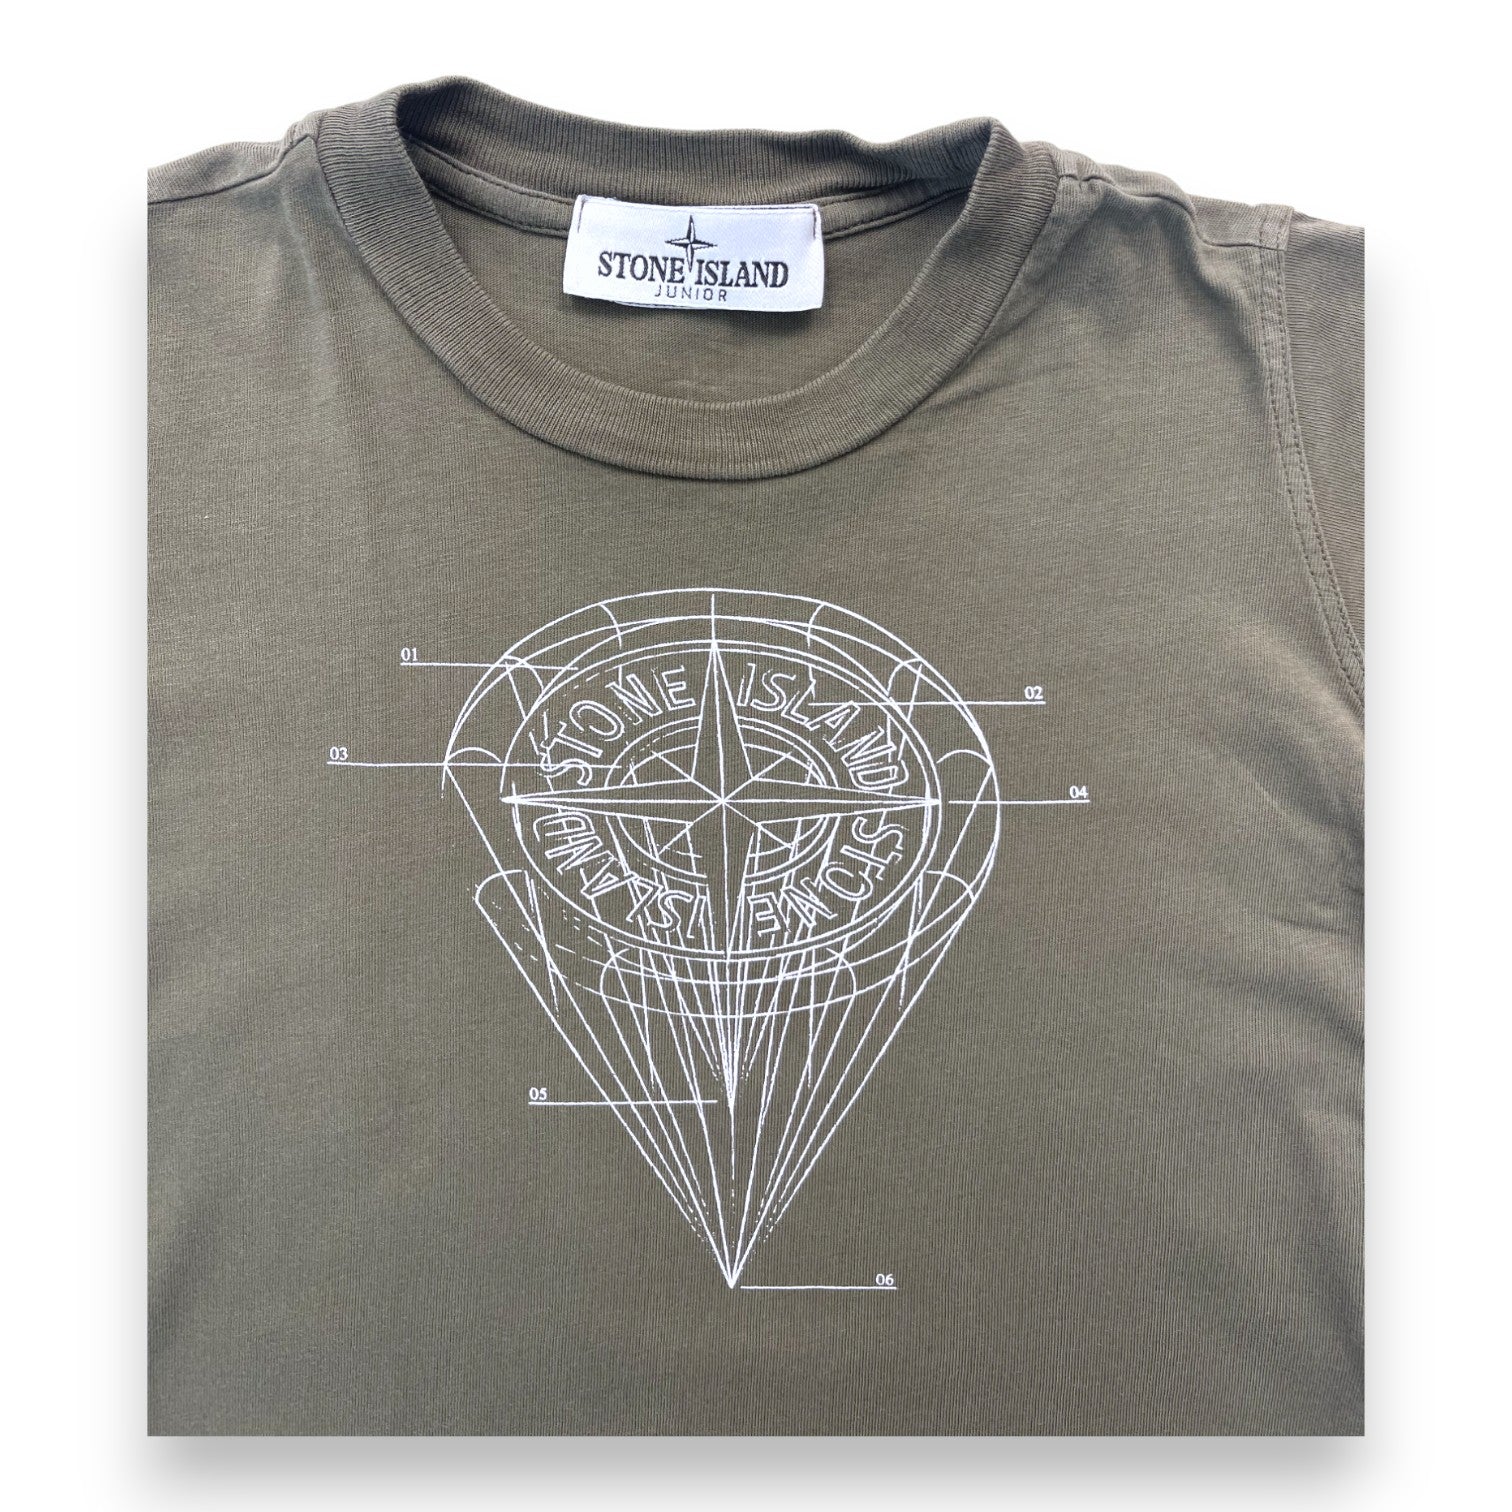 STONE ISLAND - T shirt kaki motif boussole et logo - 2 ans